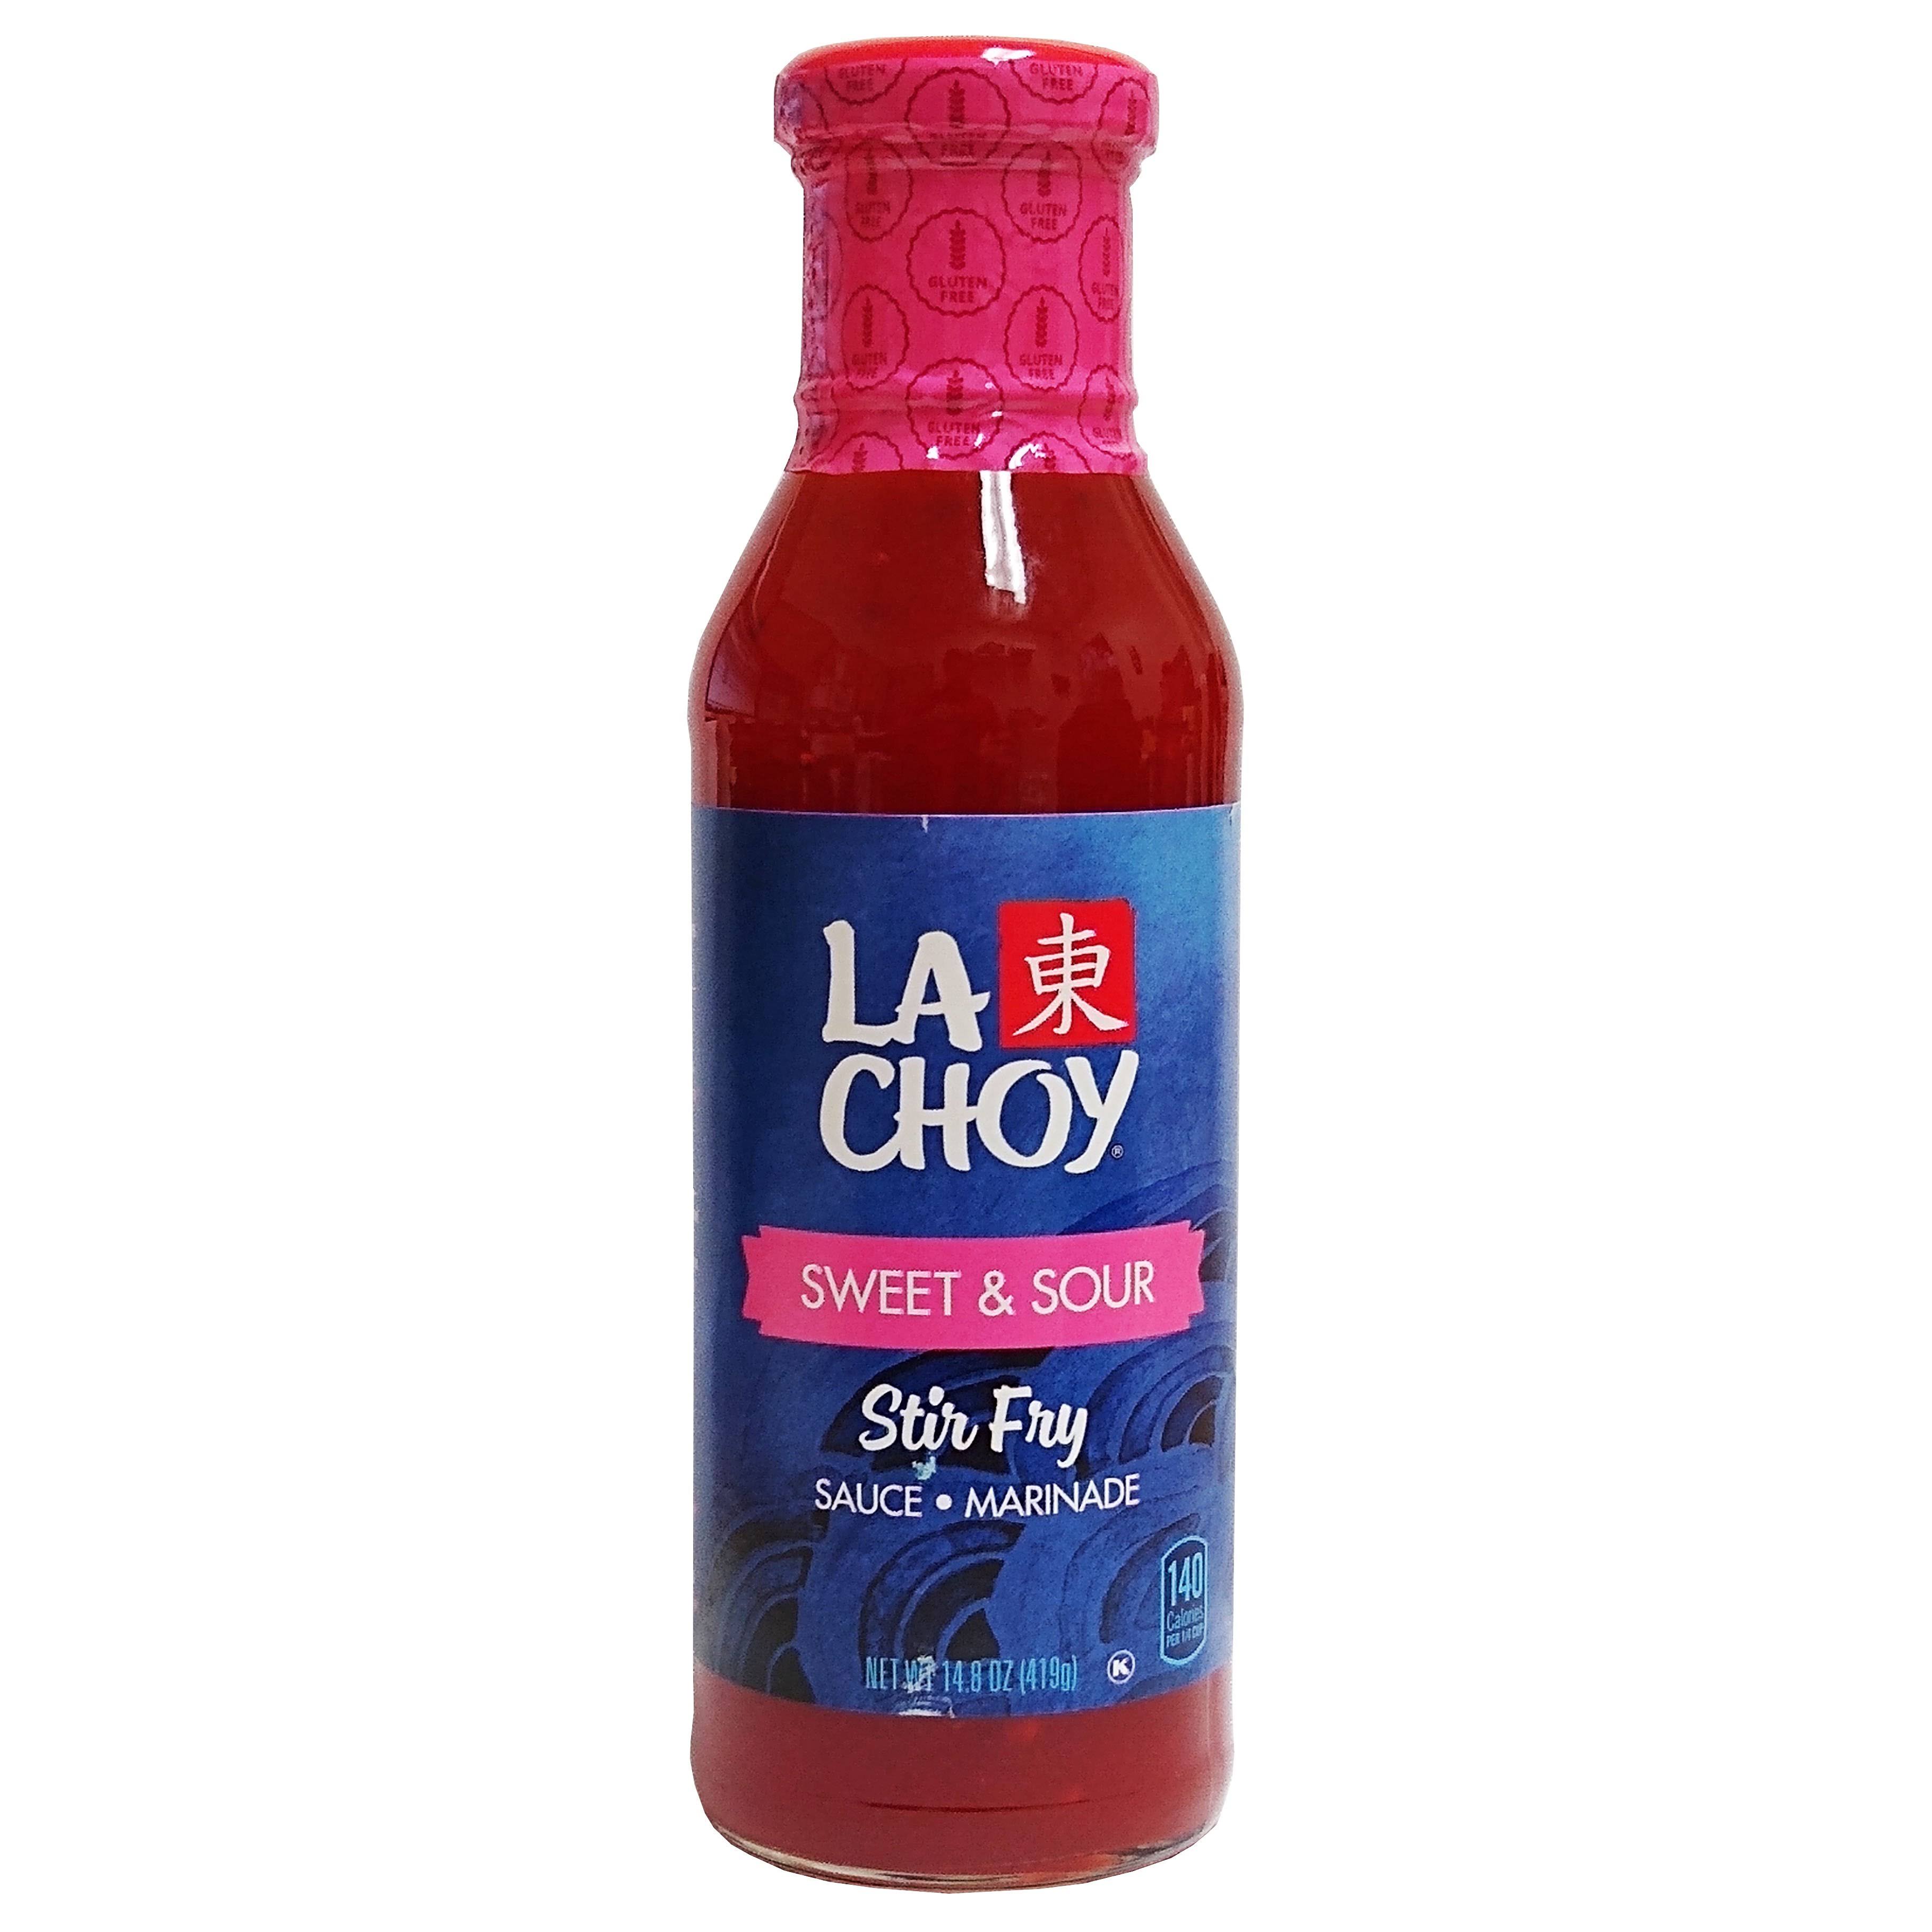 La Choy Marinade Sauce, Sweet & Sour, Stir Fry - 14.8 oz